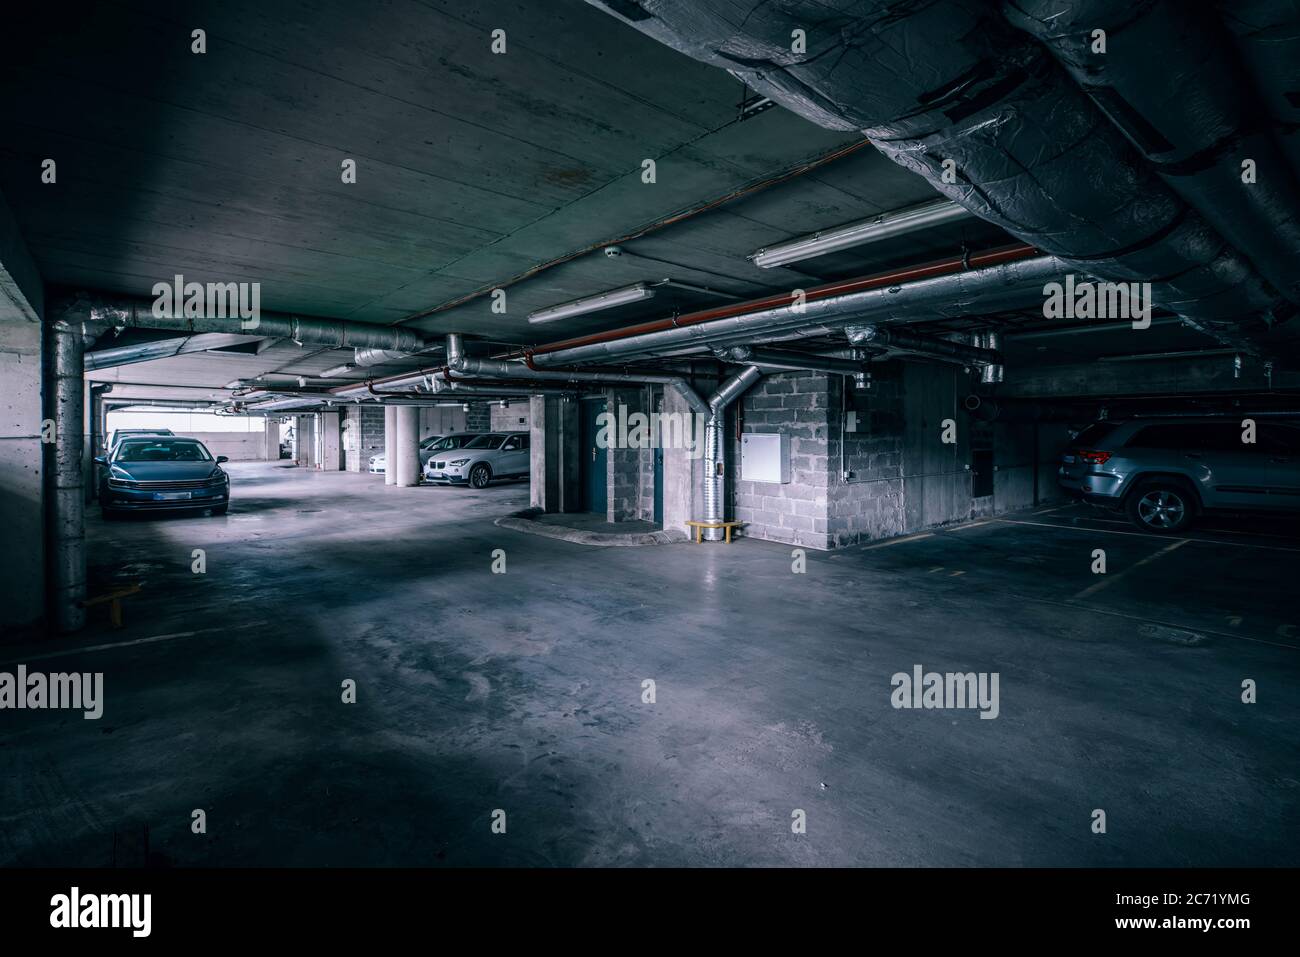 Cars on the underground parking. Interior of garage in industrial building. Concrete floor, brick walls. Stock Photo